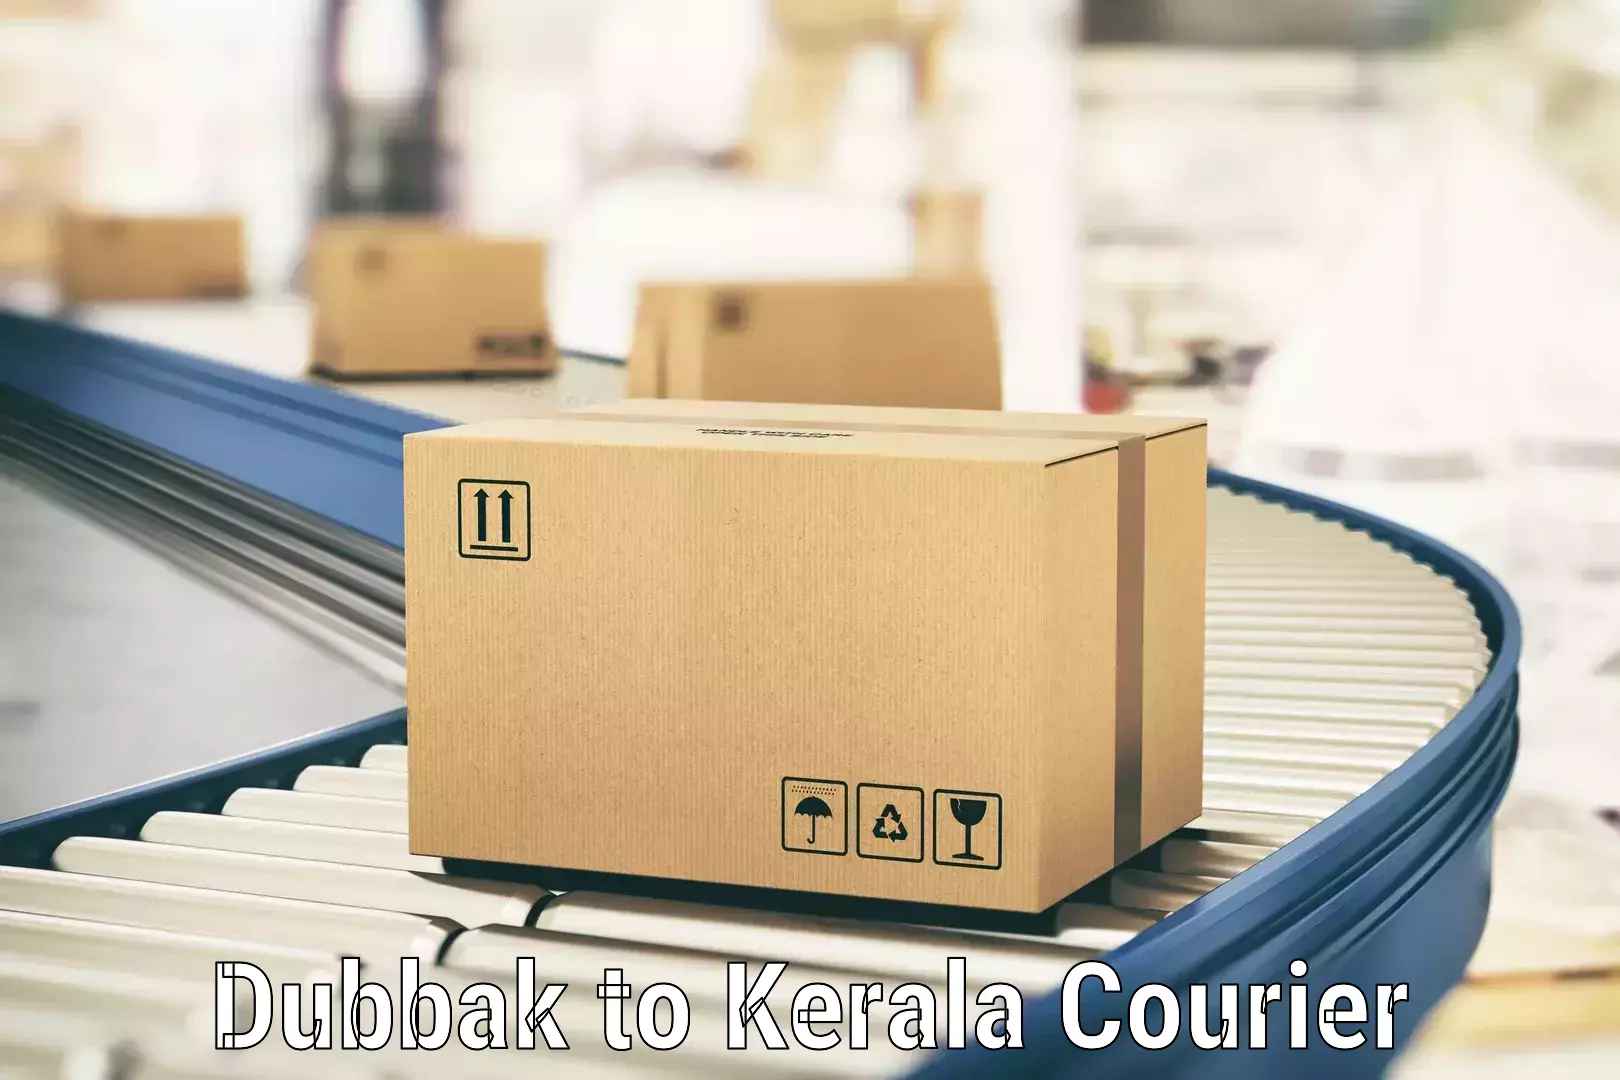 Business delivery service Dubbak to Kerala